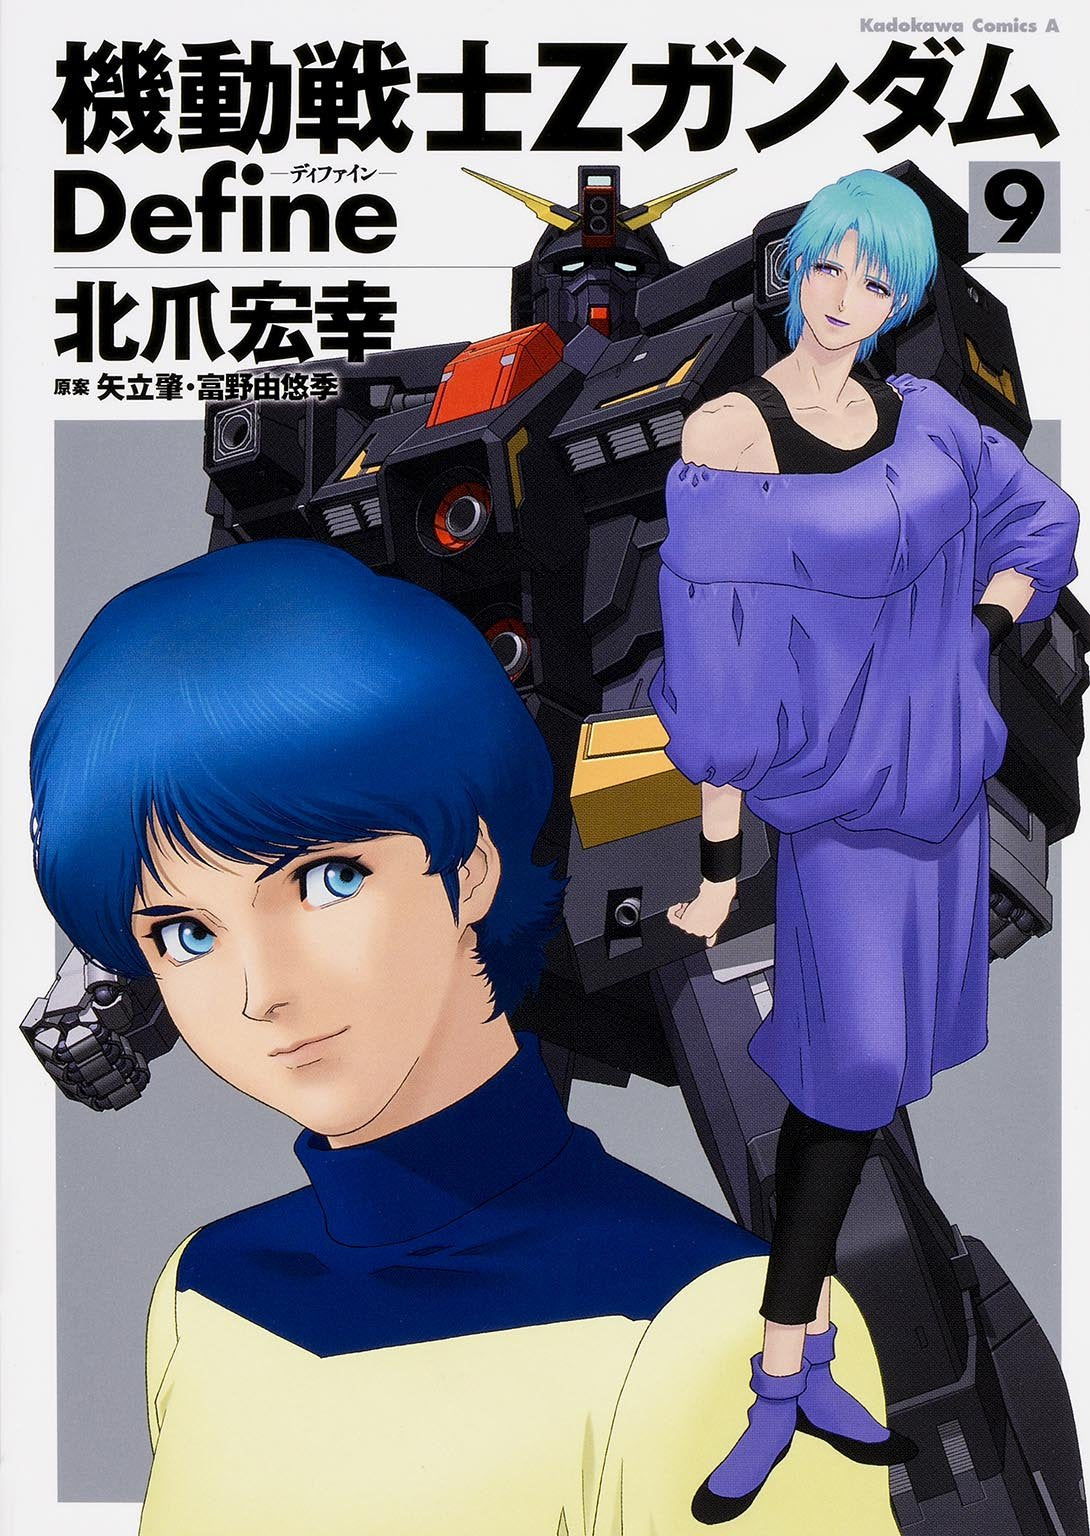 Mobile Suit Zeta Gundam Define #9 / Comic – MOYASHI JAPAN BOOKS